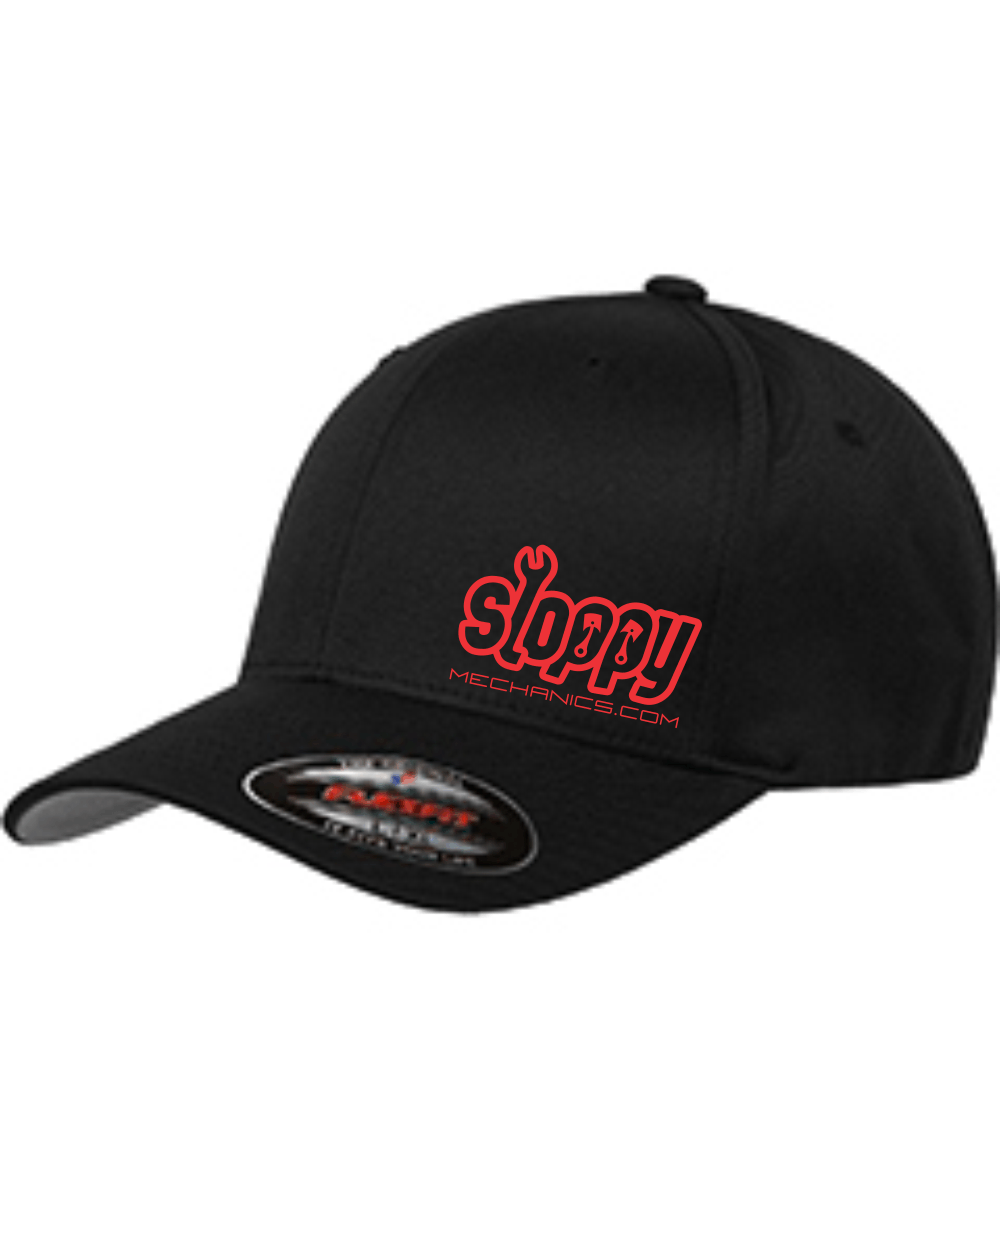 Sloppy Mechanics Red Logo Adult Flex-fit Hat